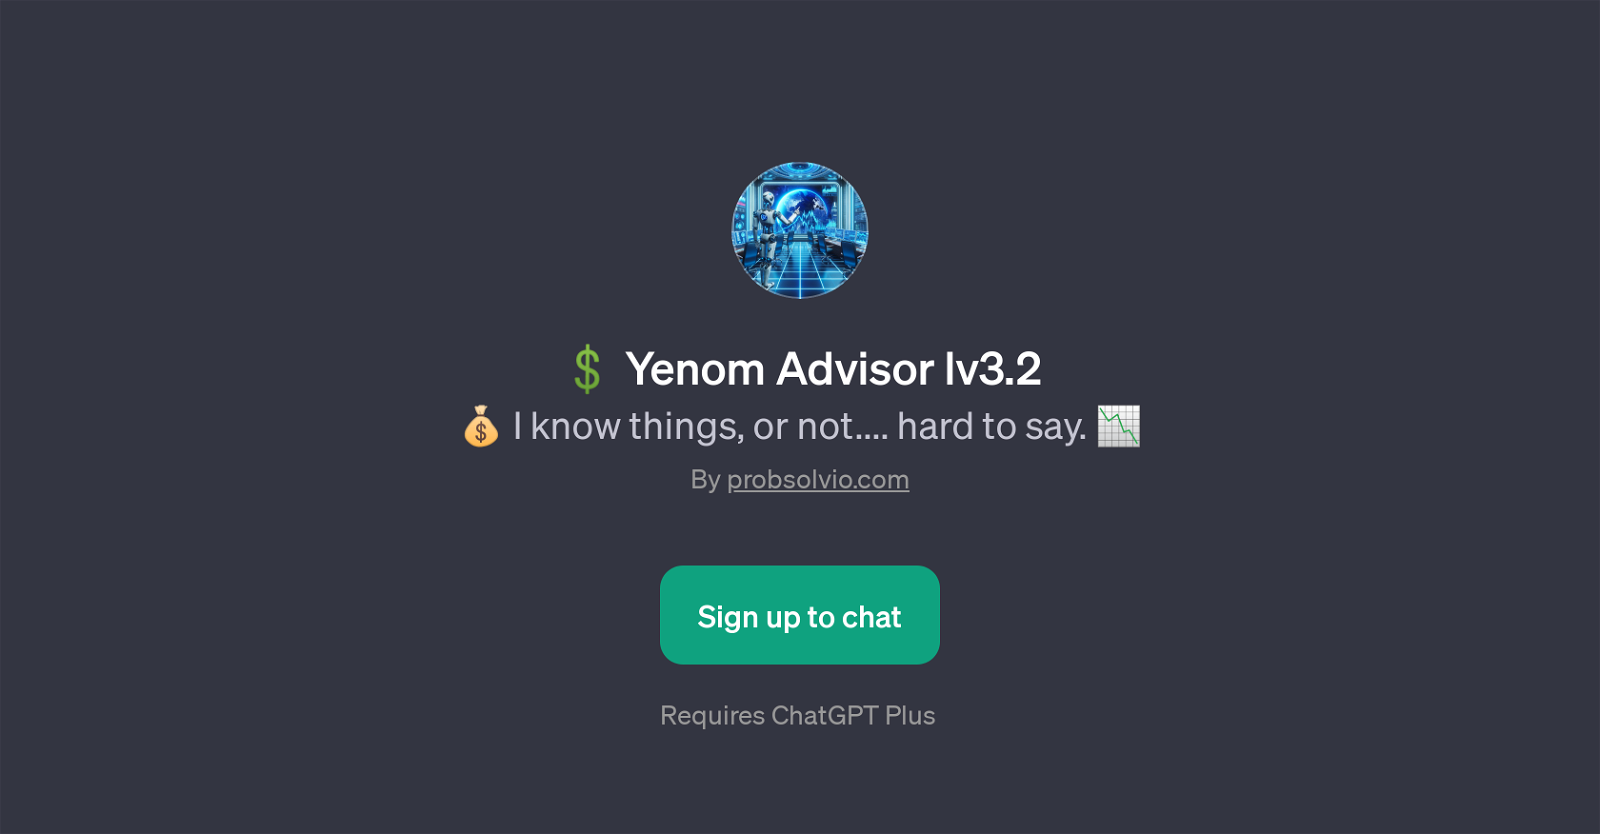 Yenom Advisor lv3.2 website